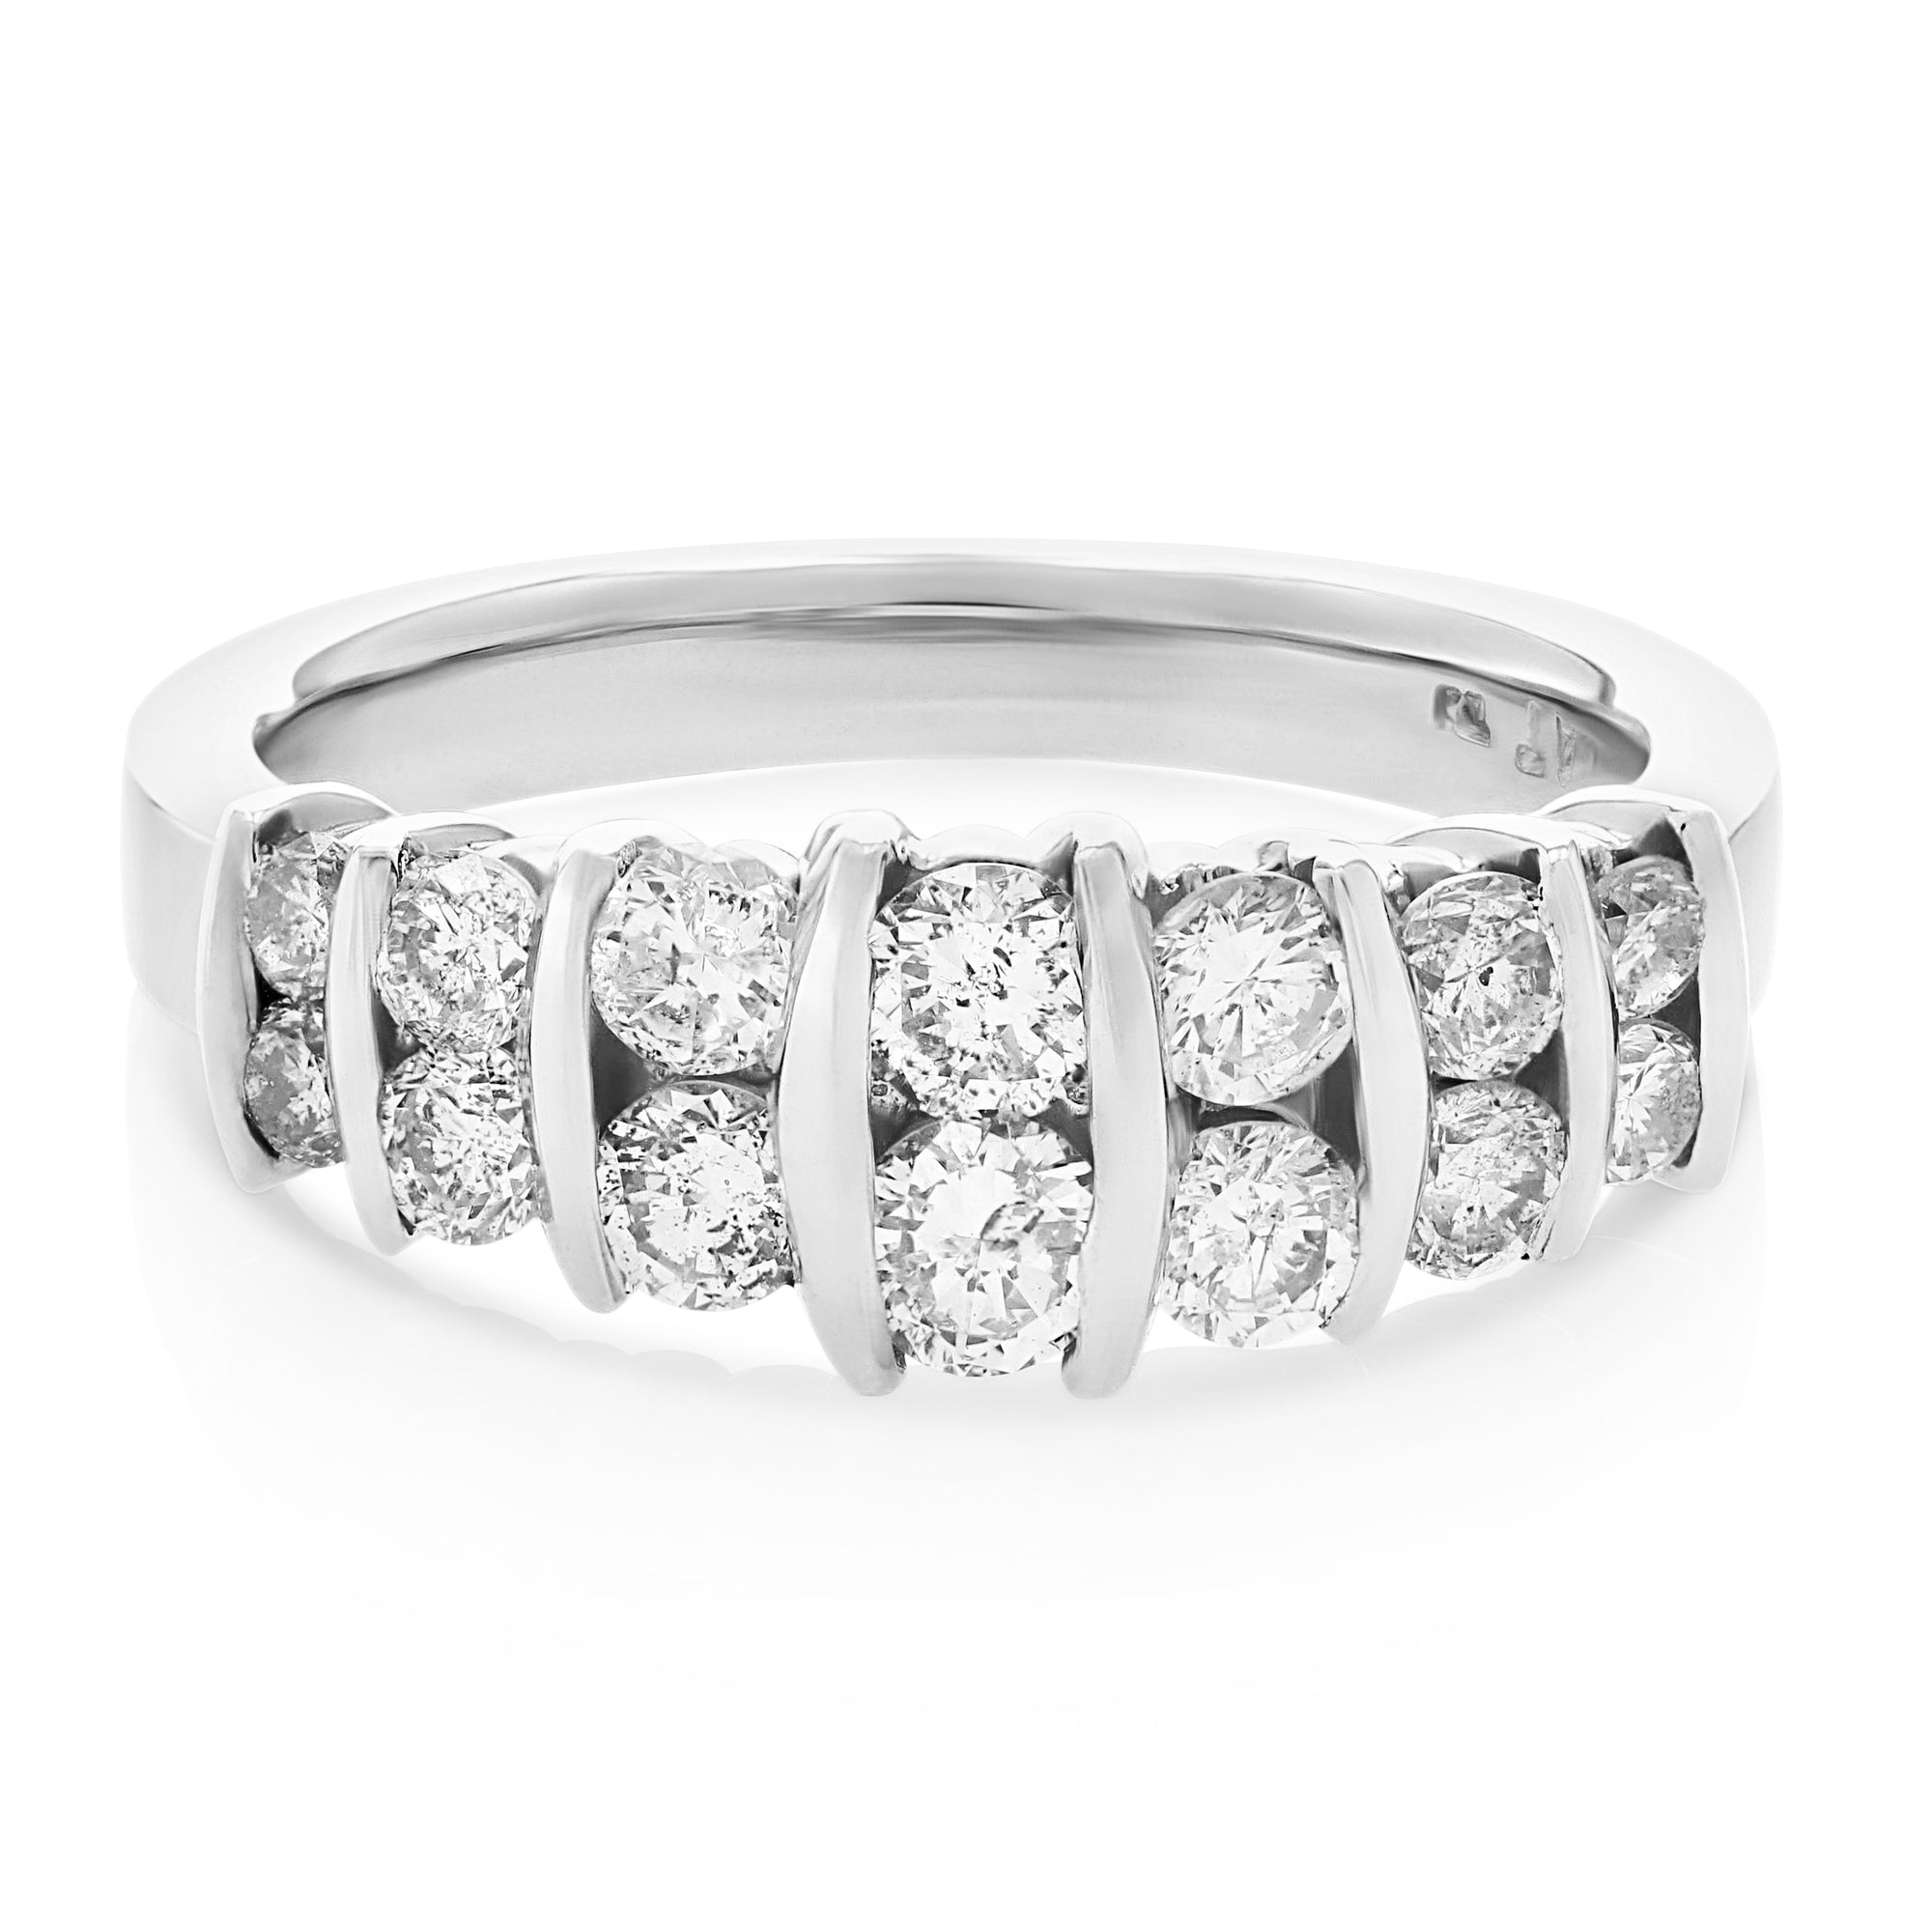 1 cttw Diamond Ring Platinum Size 6